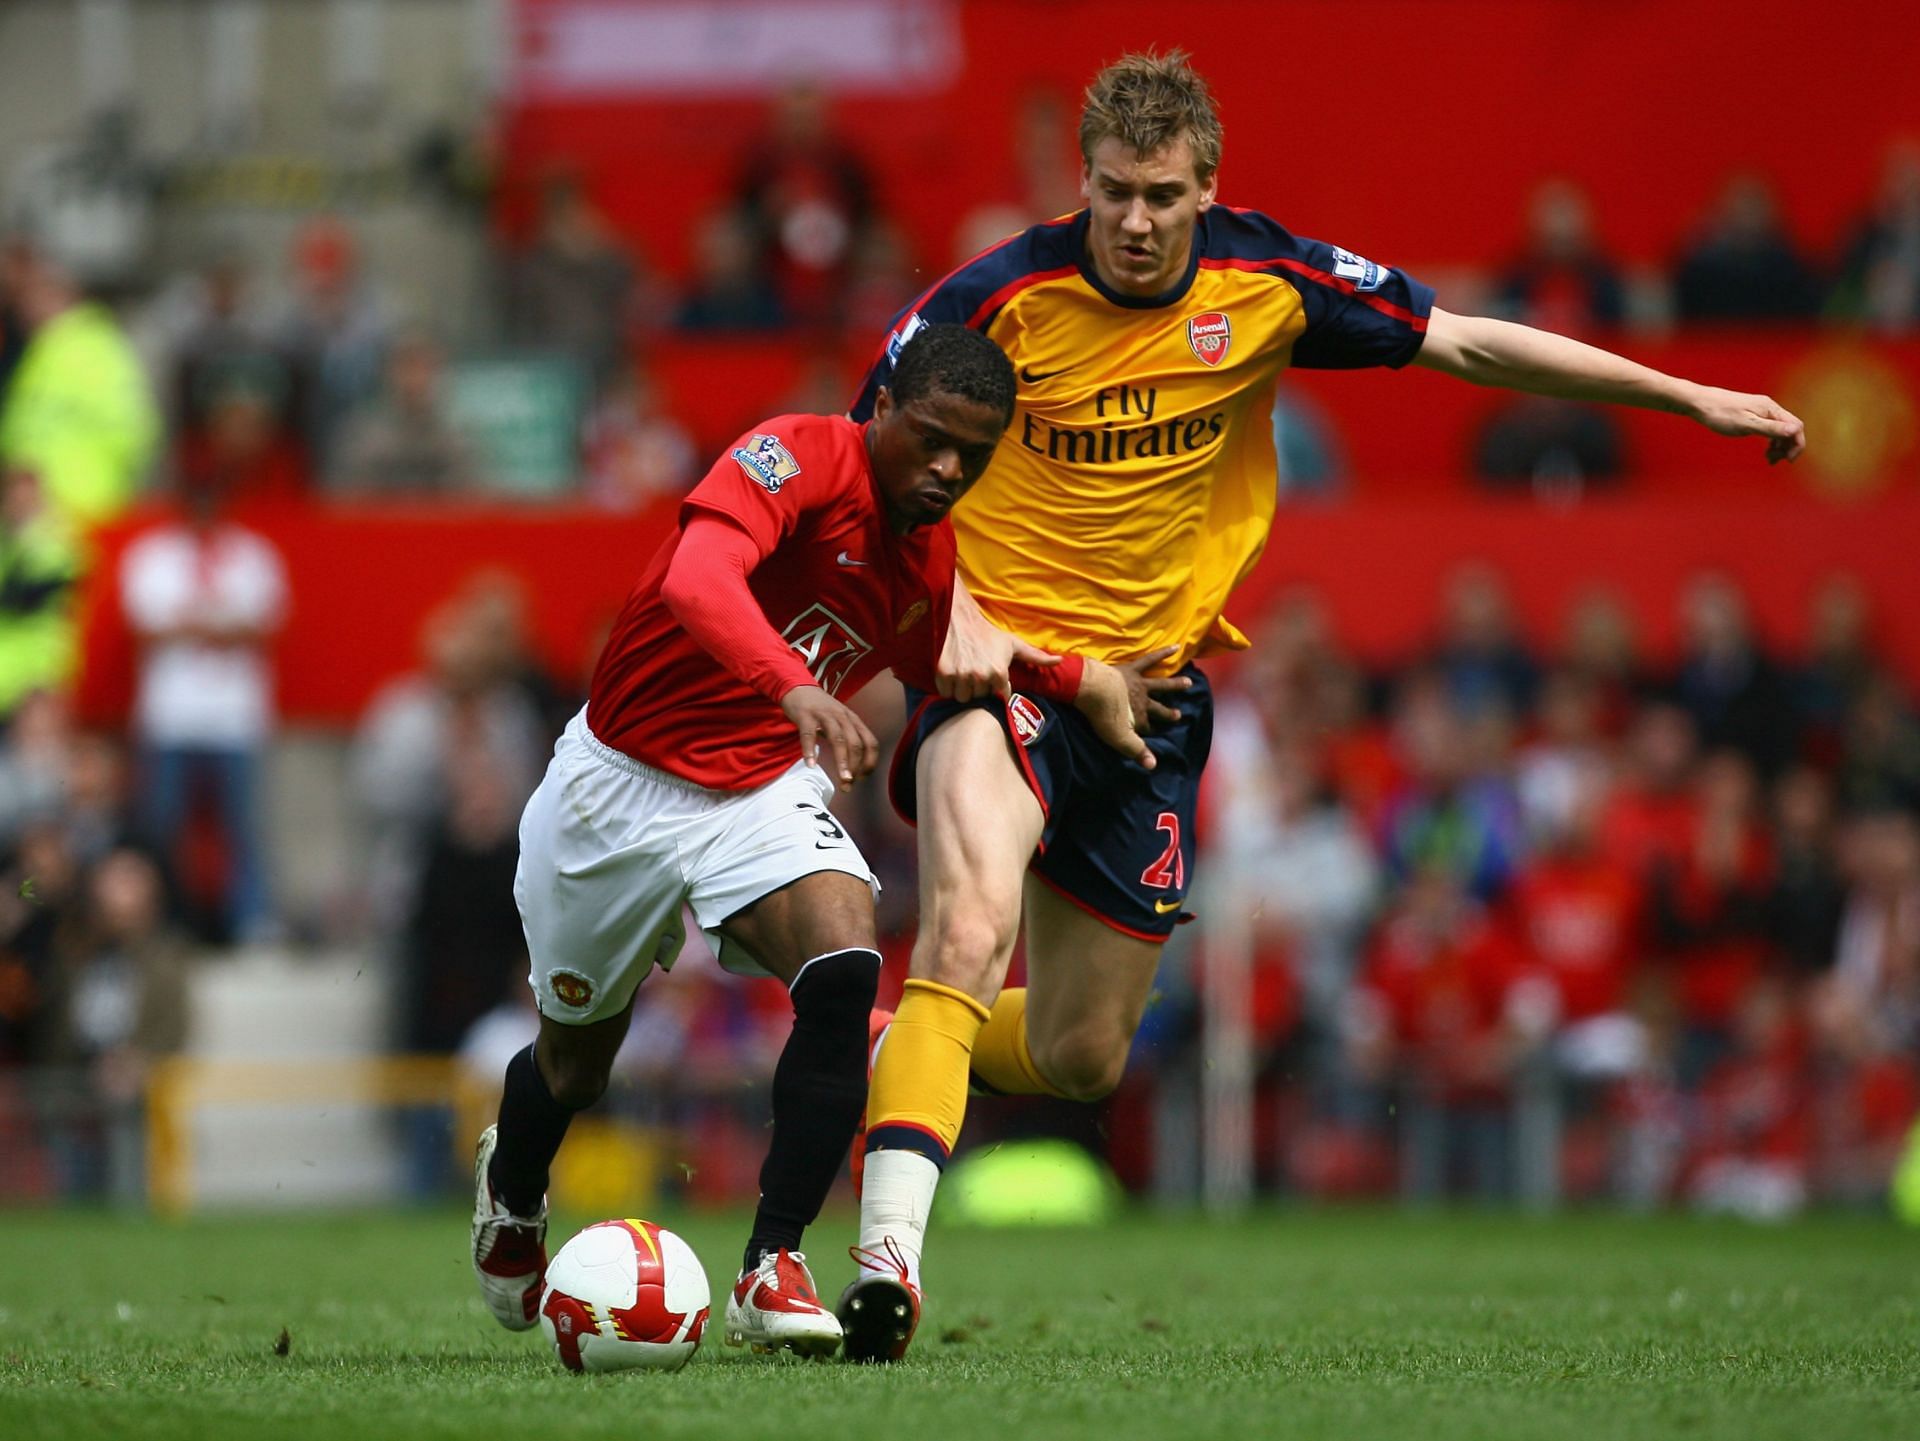 Nicklas Bendtner in action against Manchester United clash (via Getty Images)